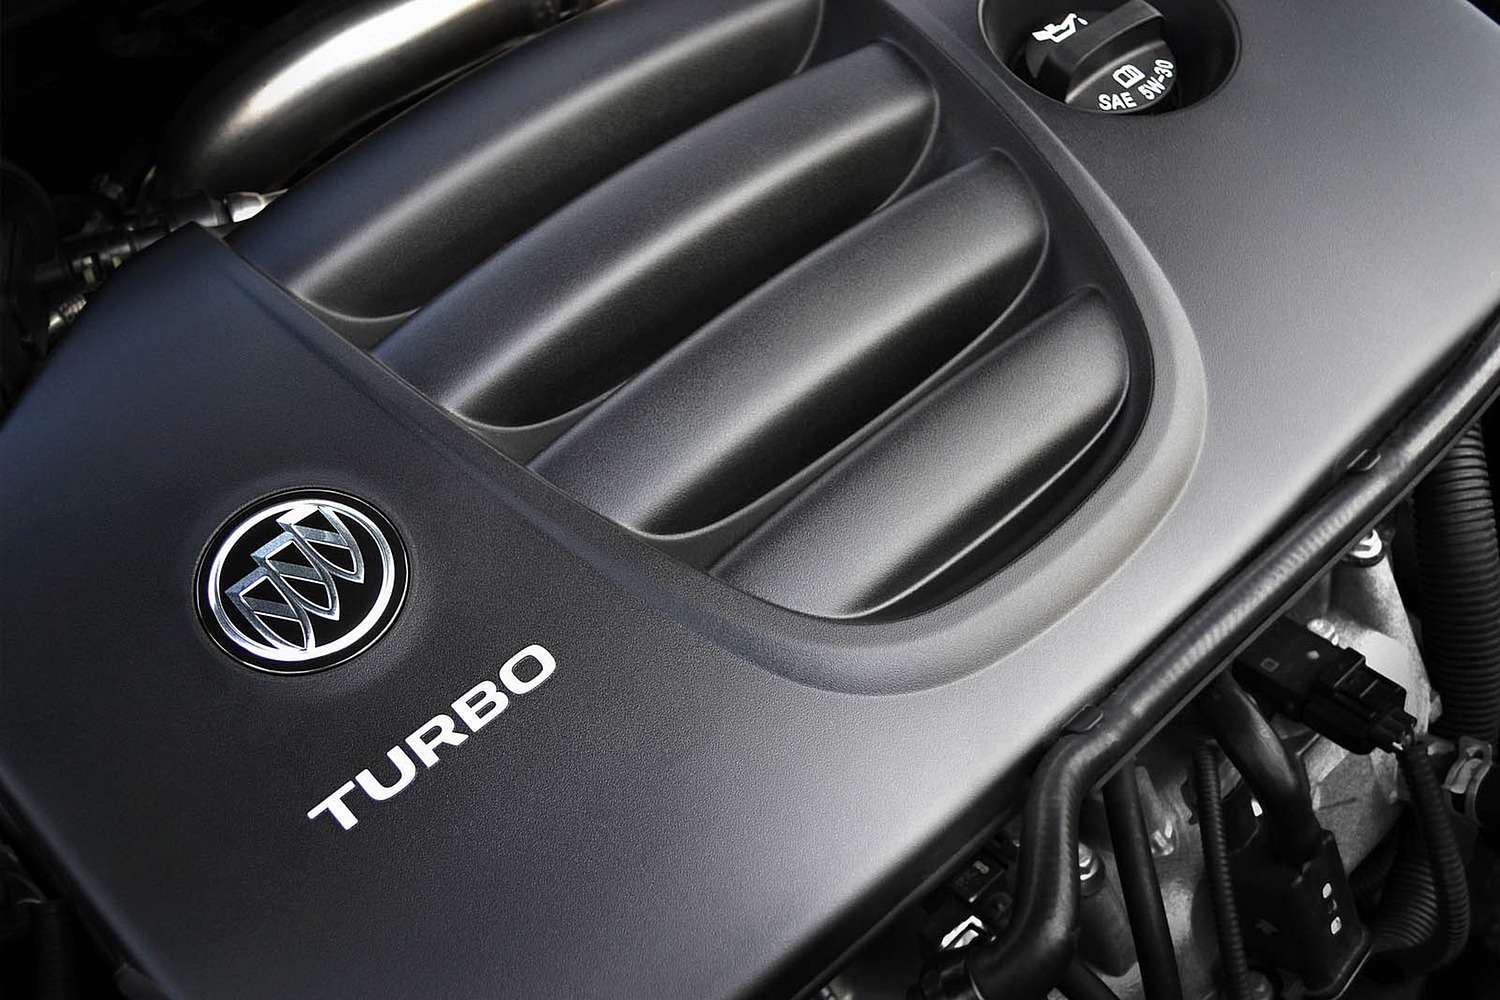 Buick Verano Premium Turbo Group Sedan 2.0L I4 Turbo Engine (2015 model year shown)